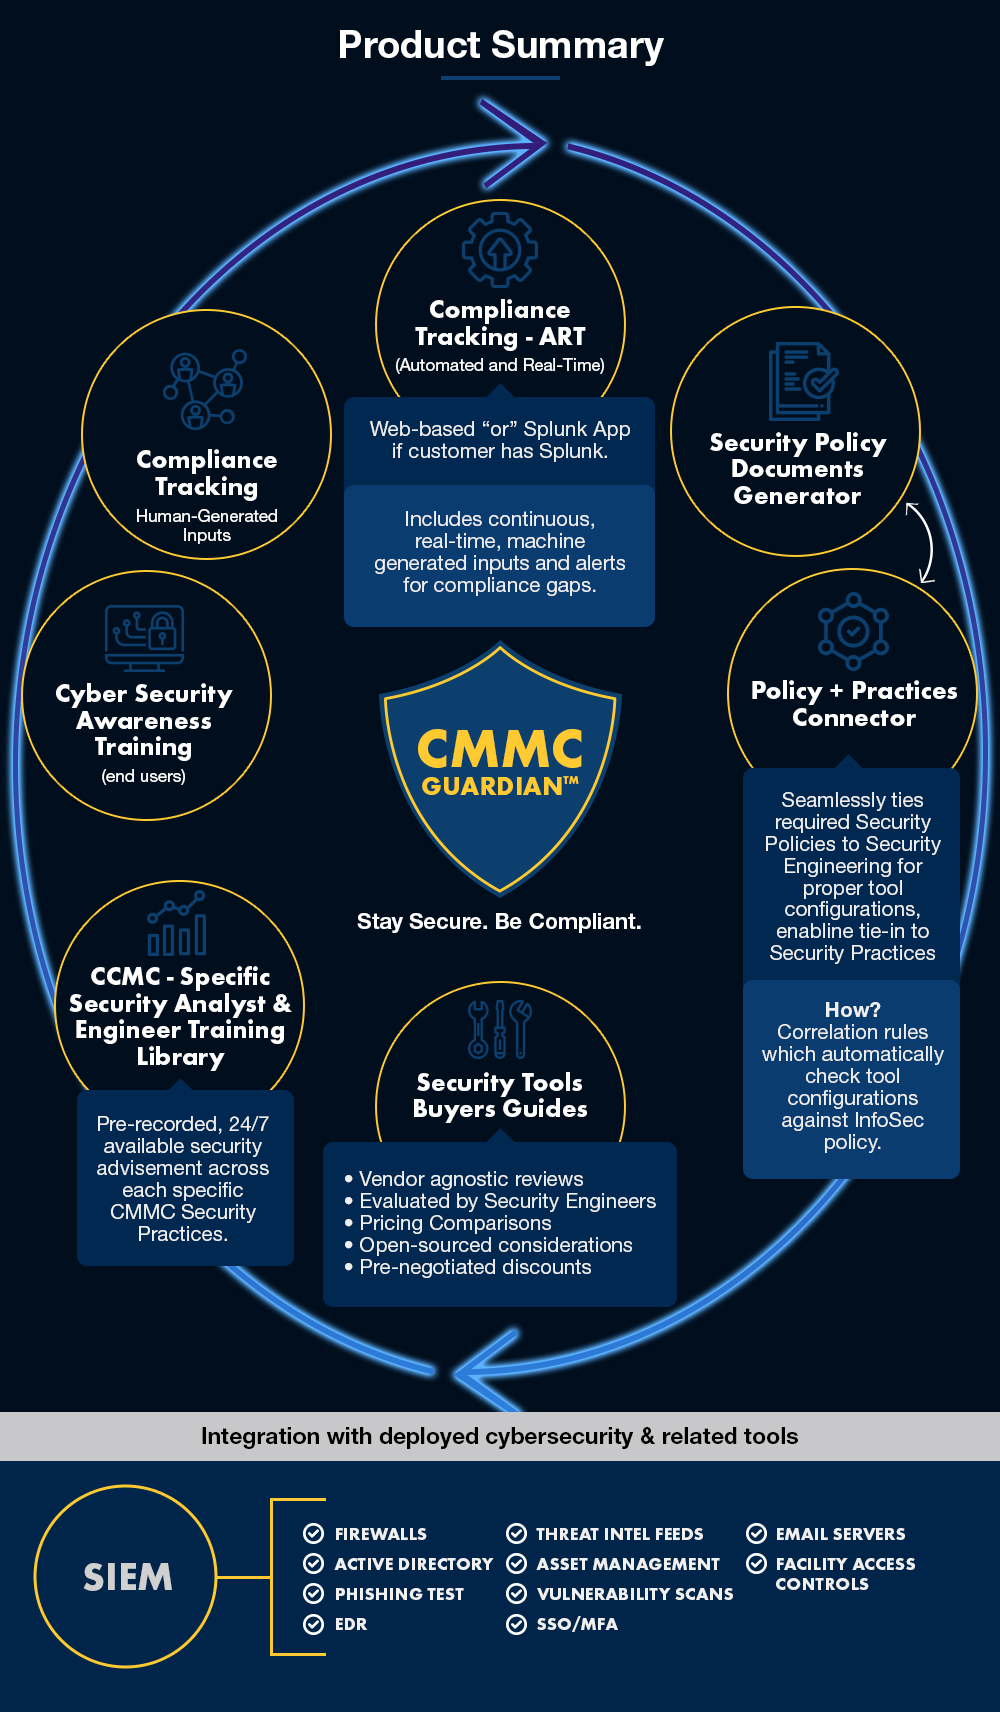 CMMC Guardian Product Summary